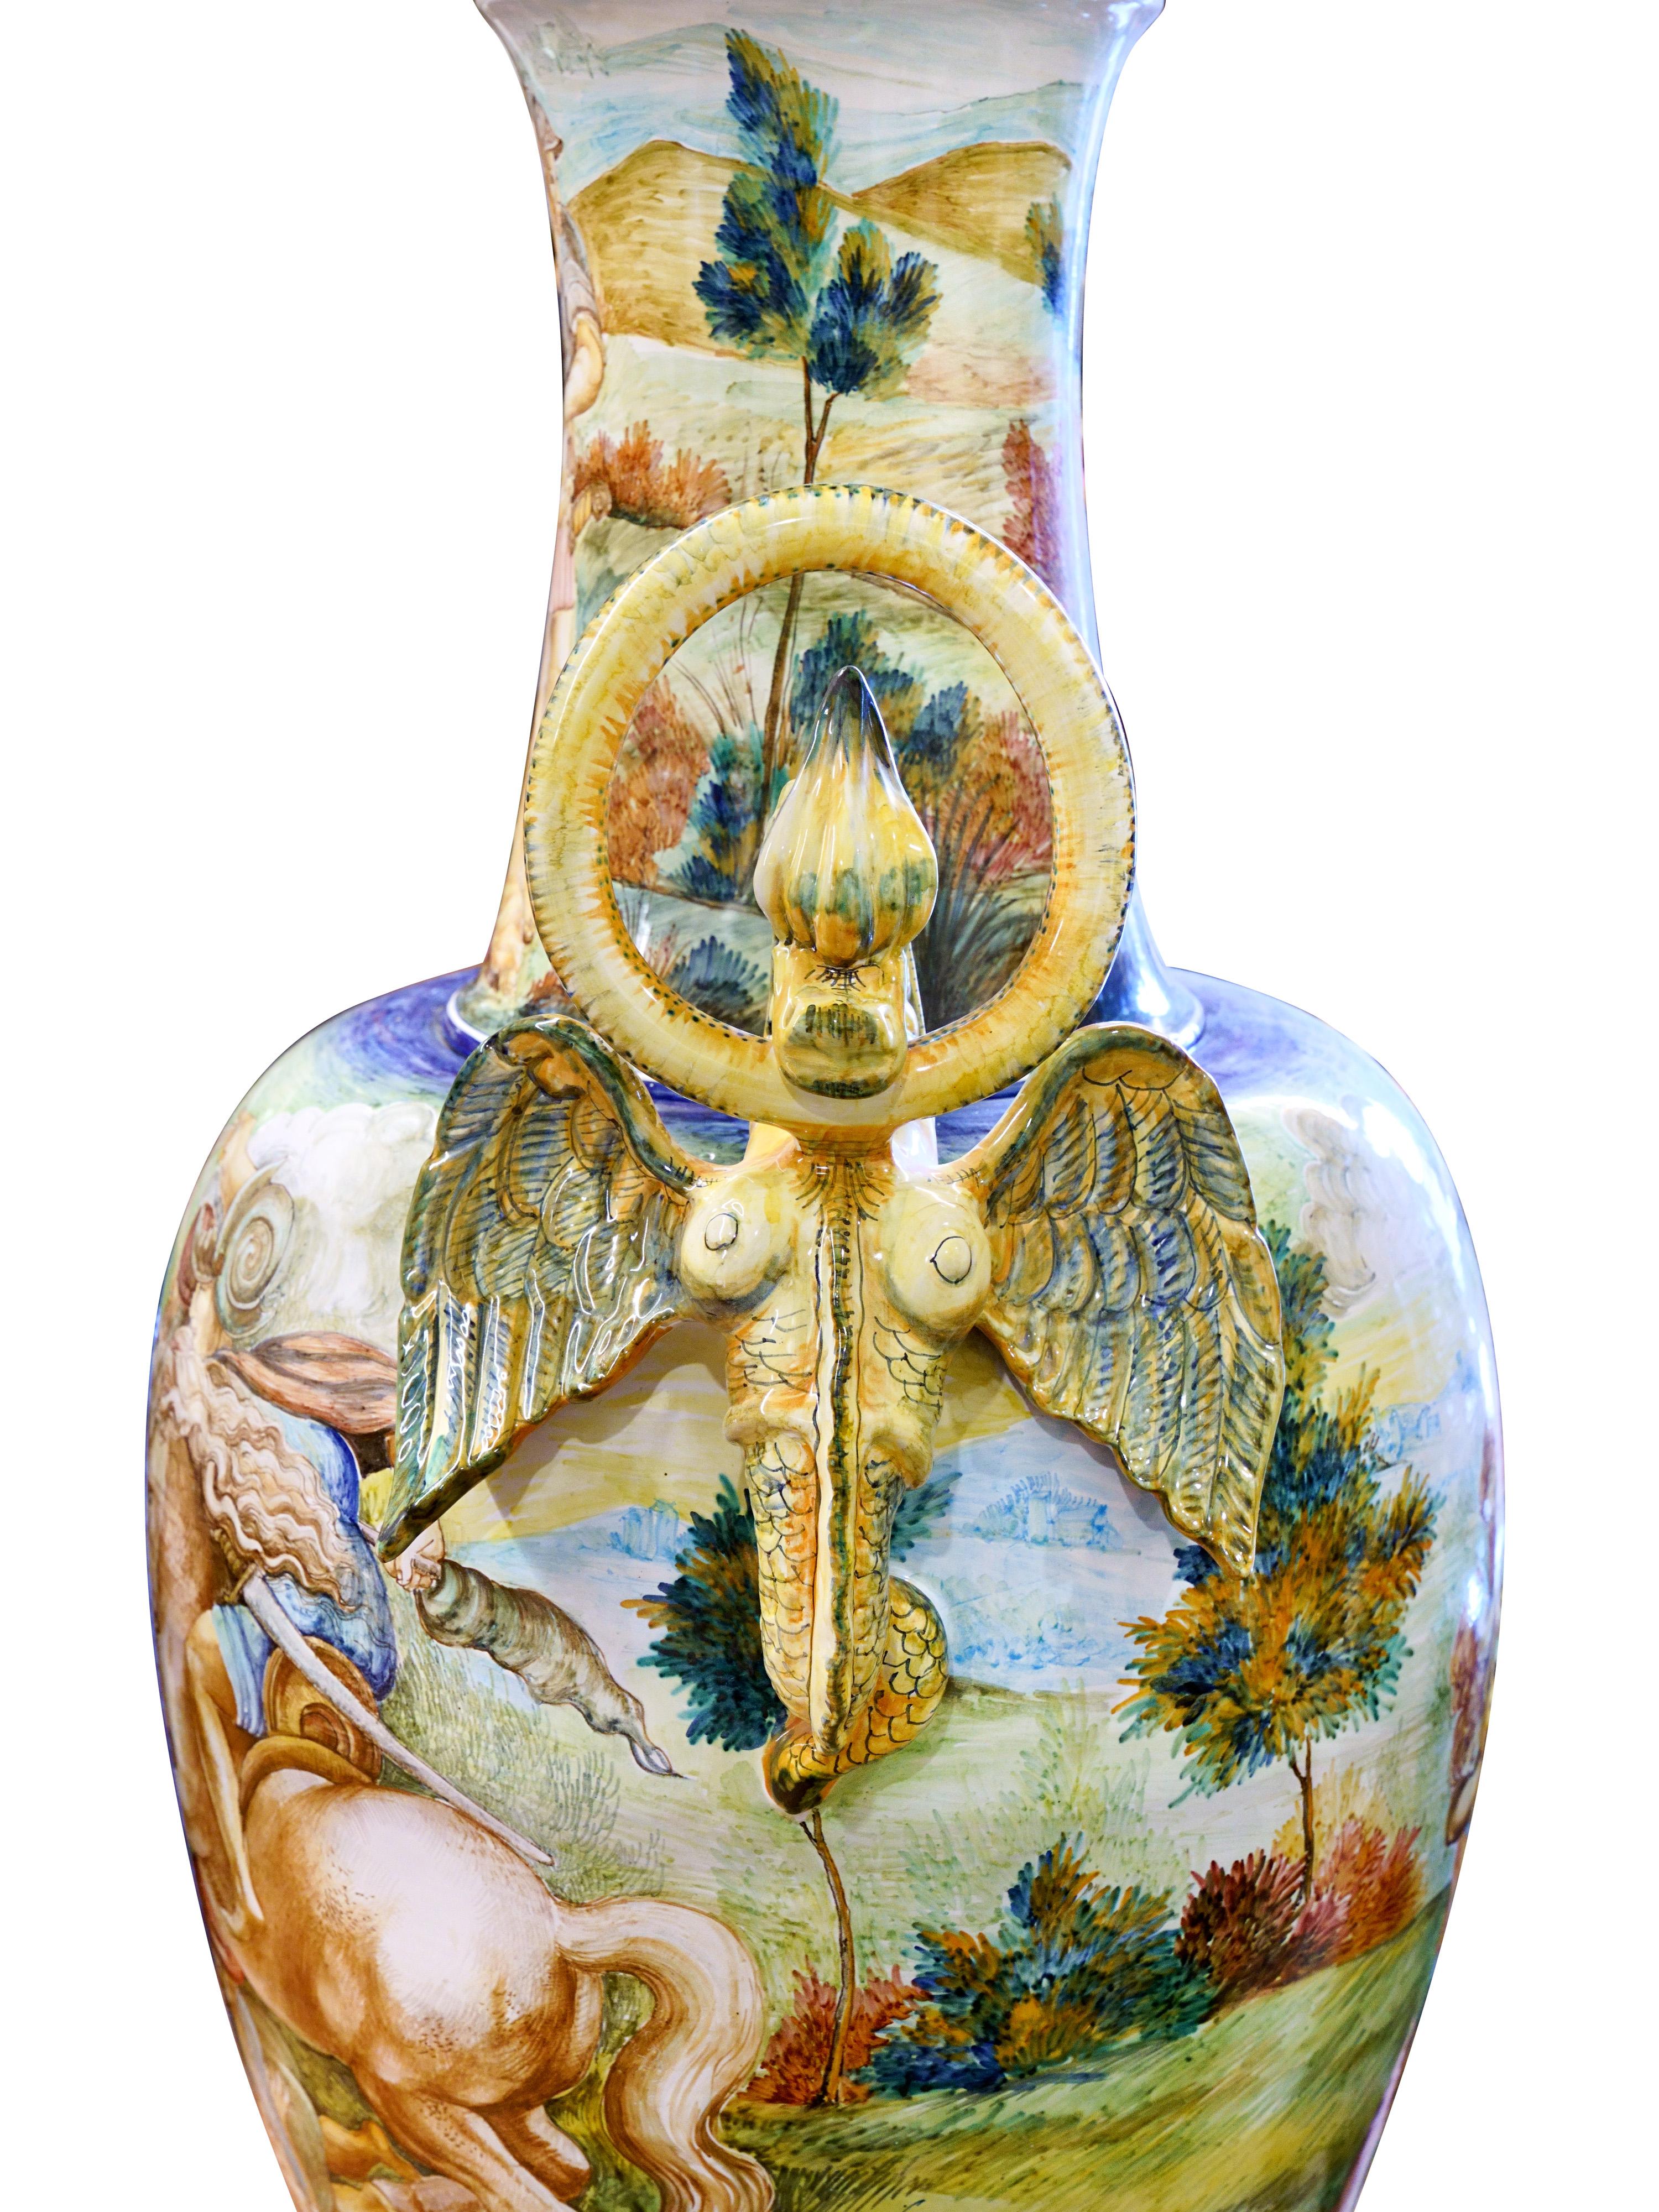 Italian Majestic Amphora Vase Majolica Painted Subject Inspired by Leonardo Da Vinci For Sale